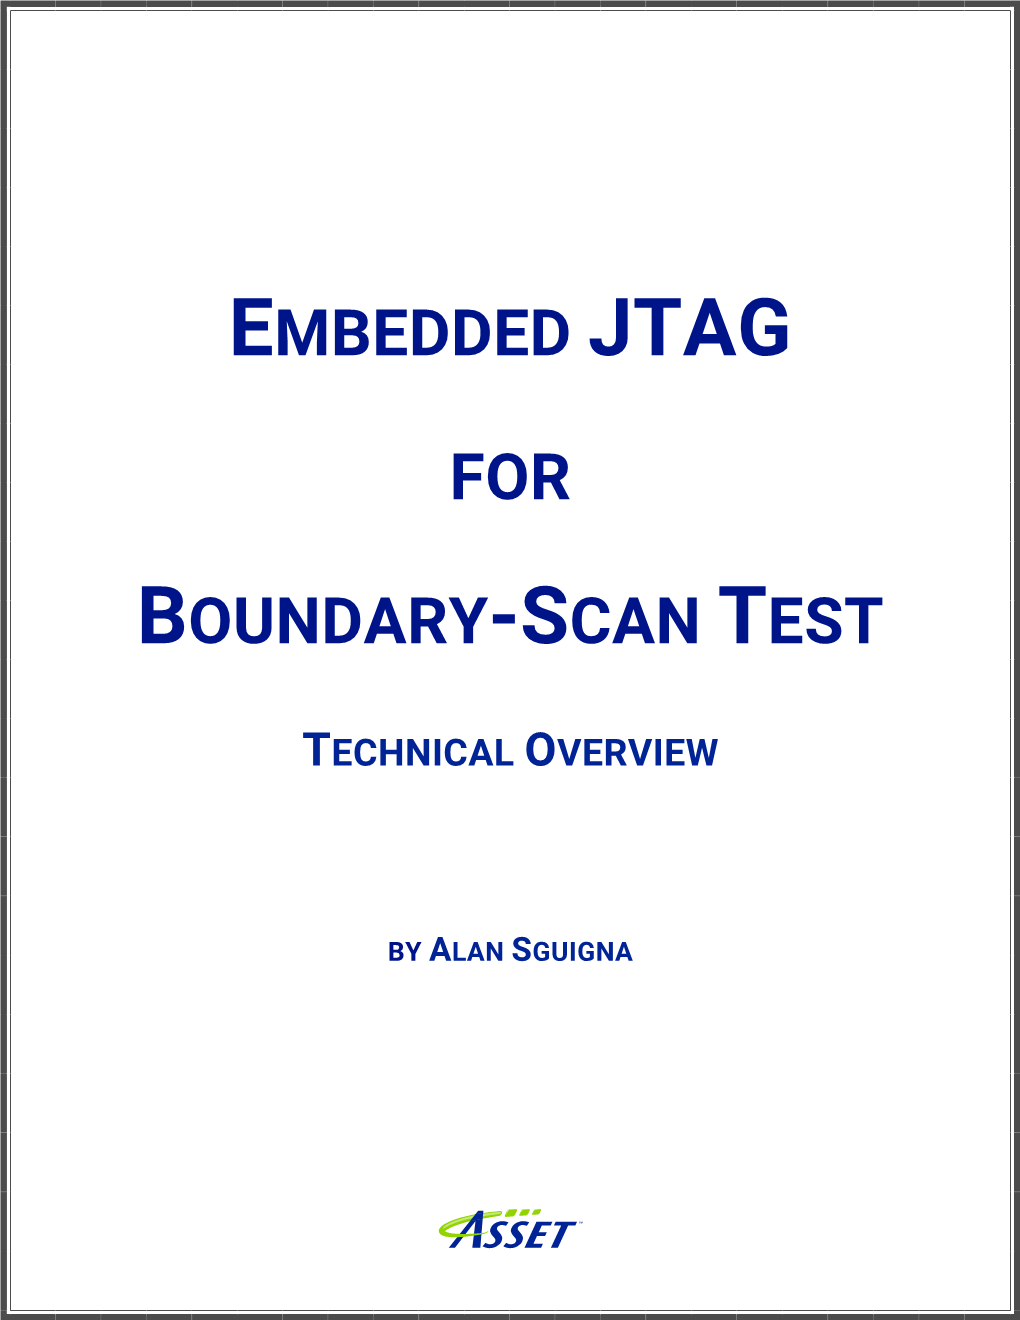 Embedded JTAG for Boundary-Scan Test